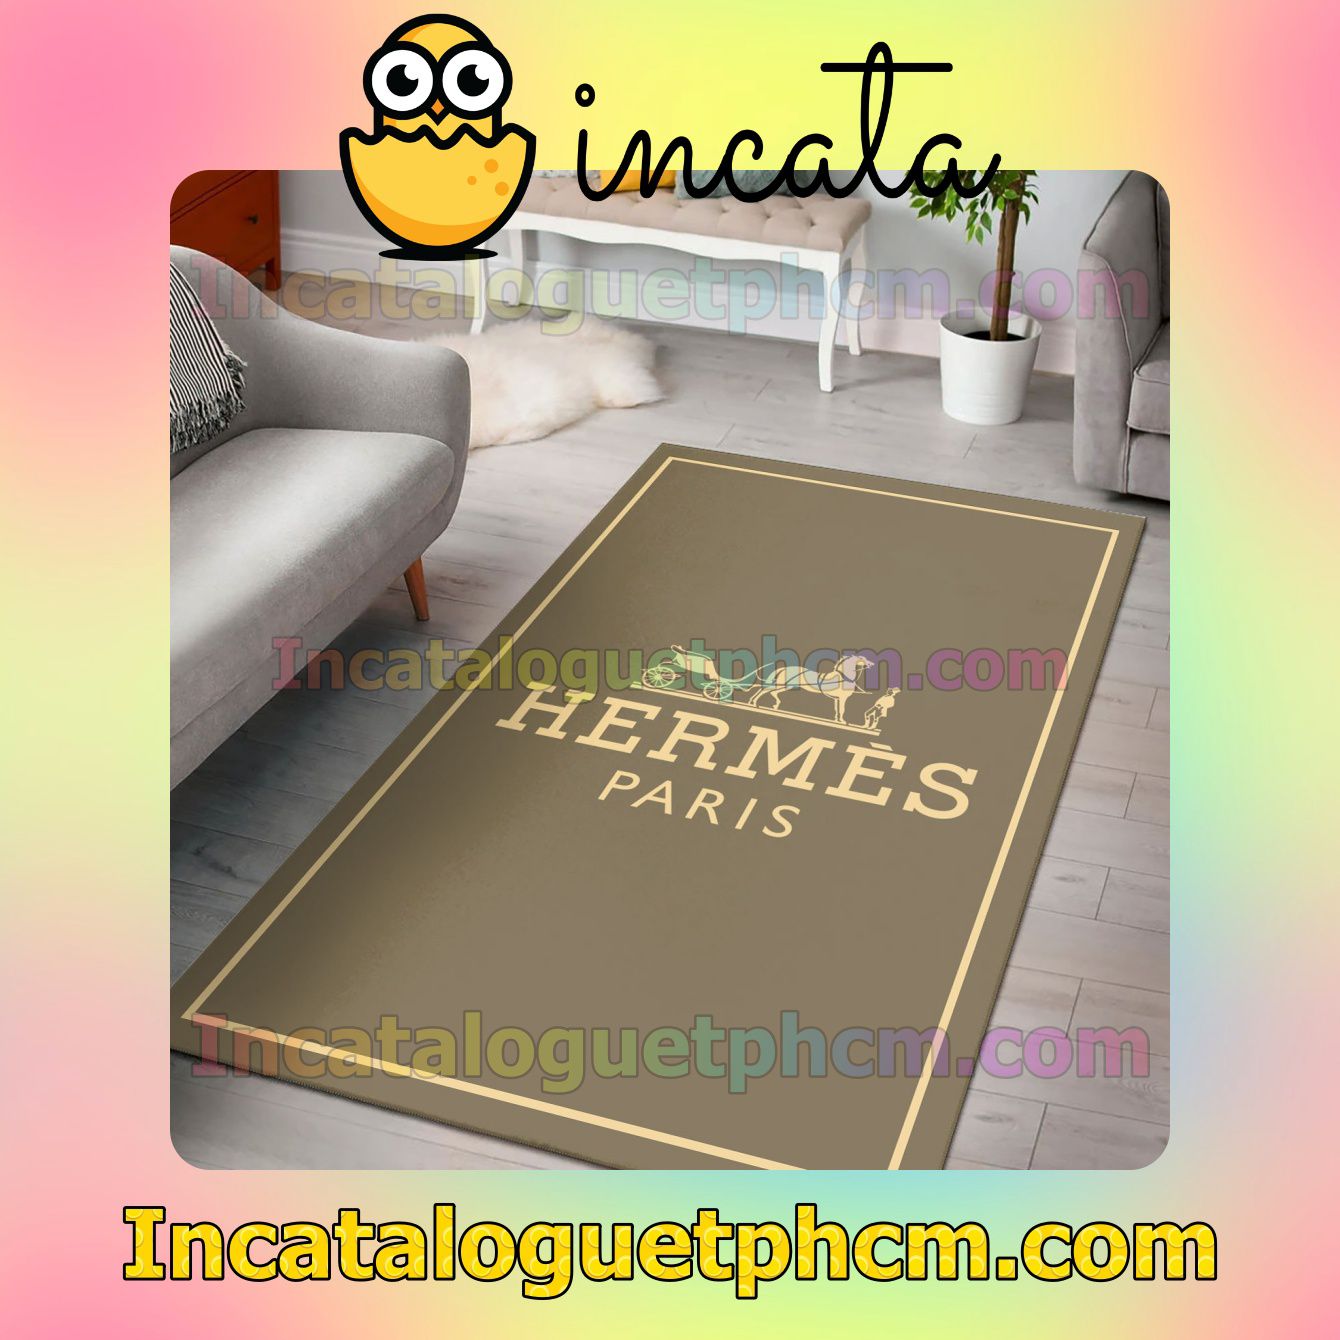 Hermes Paris Luxury Brand Light Brown Carpet Rugs For Kitchen